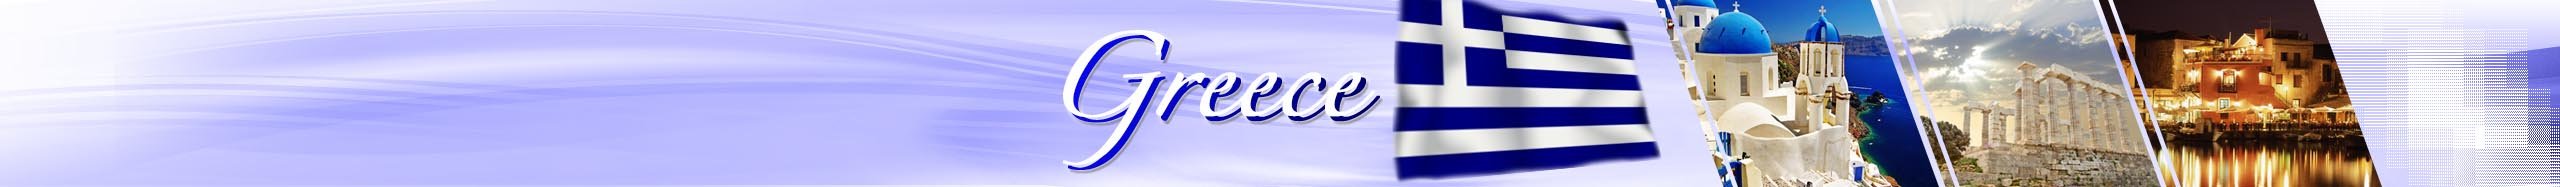 images/insurance_image/Greece Elitour.jpg